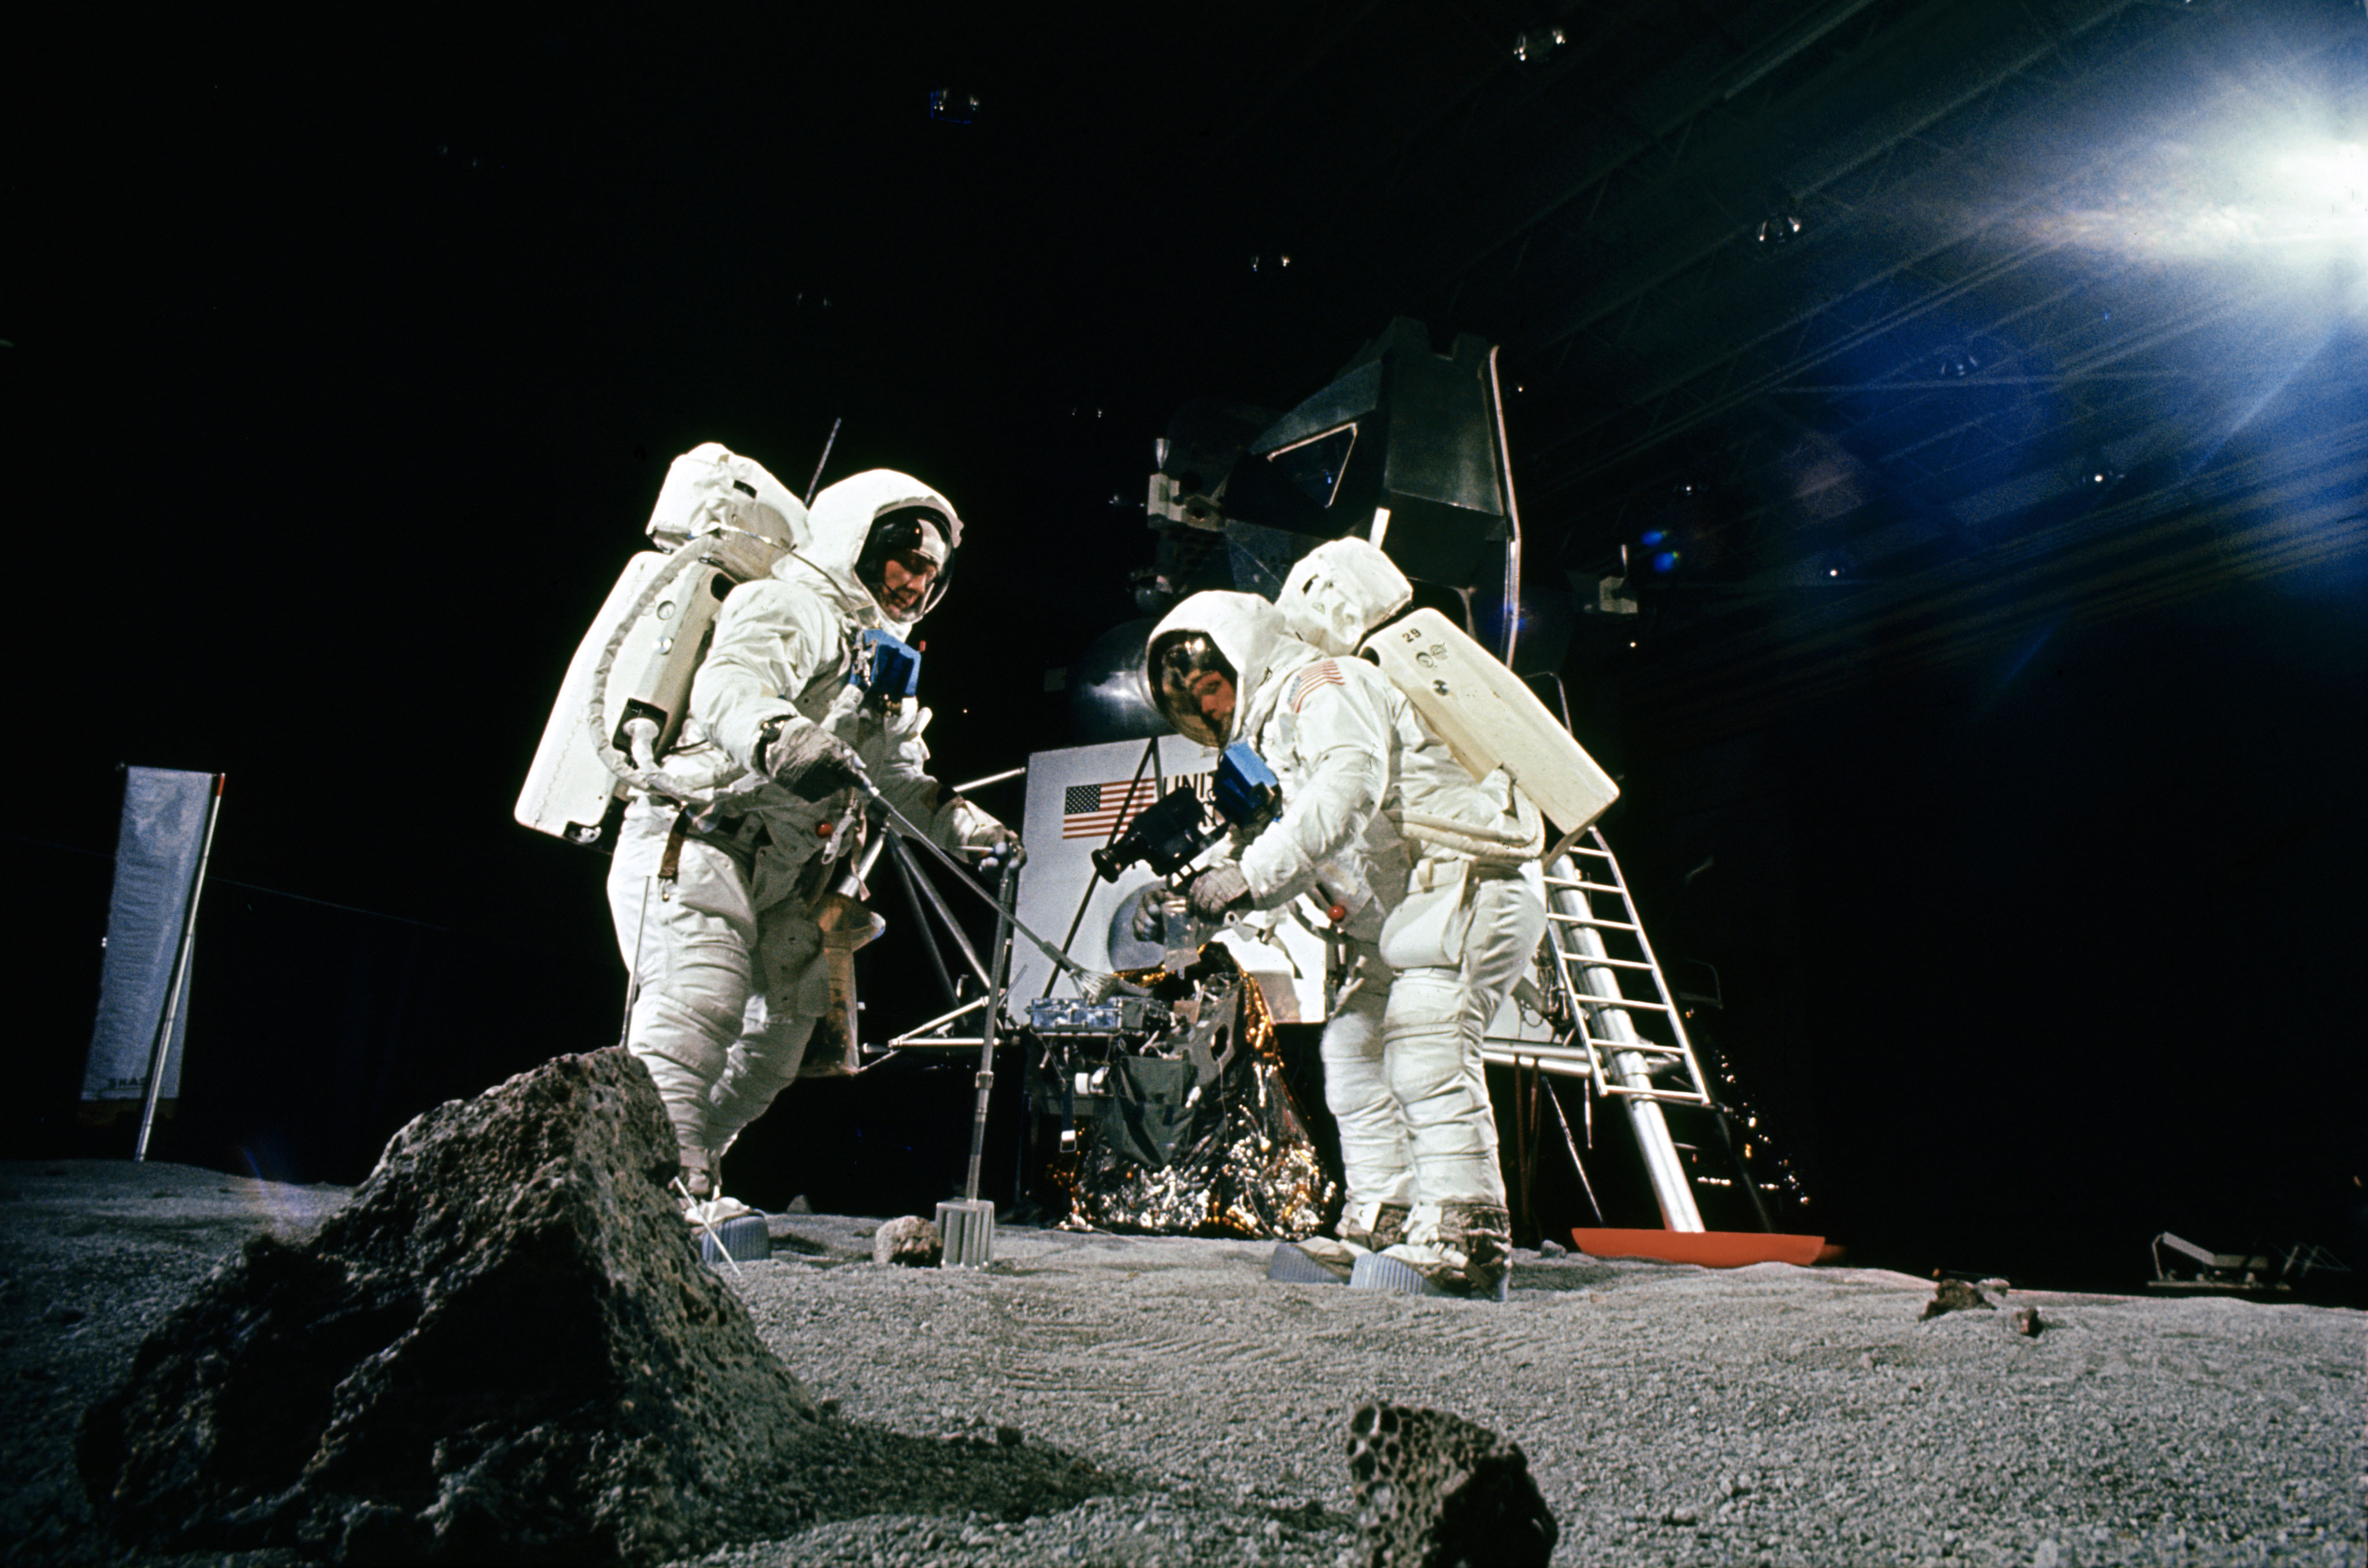 Edwin E. “Buzz” Aldrin, left, and Armstrong train for lunar surface activities